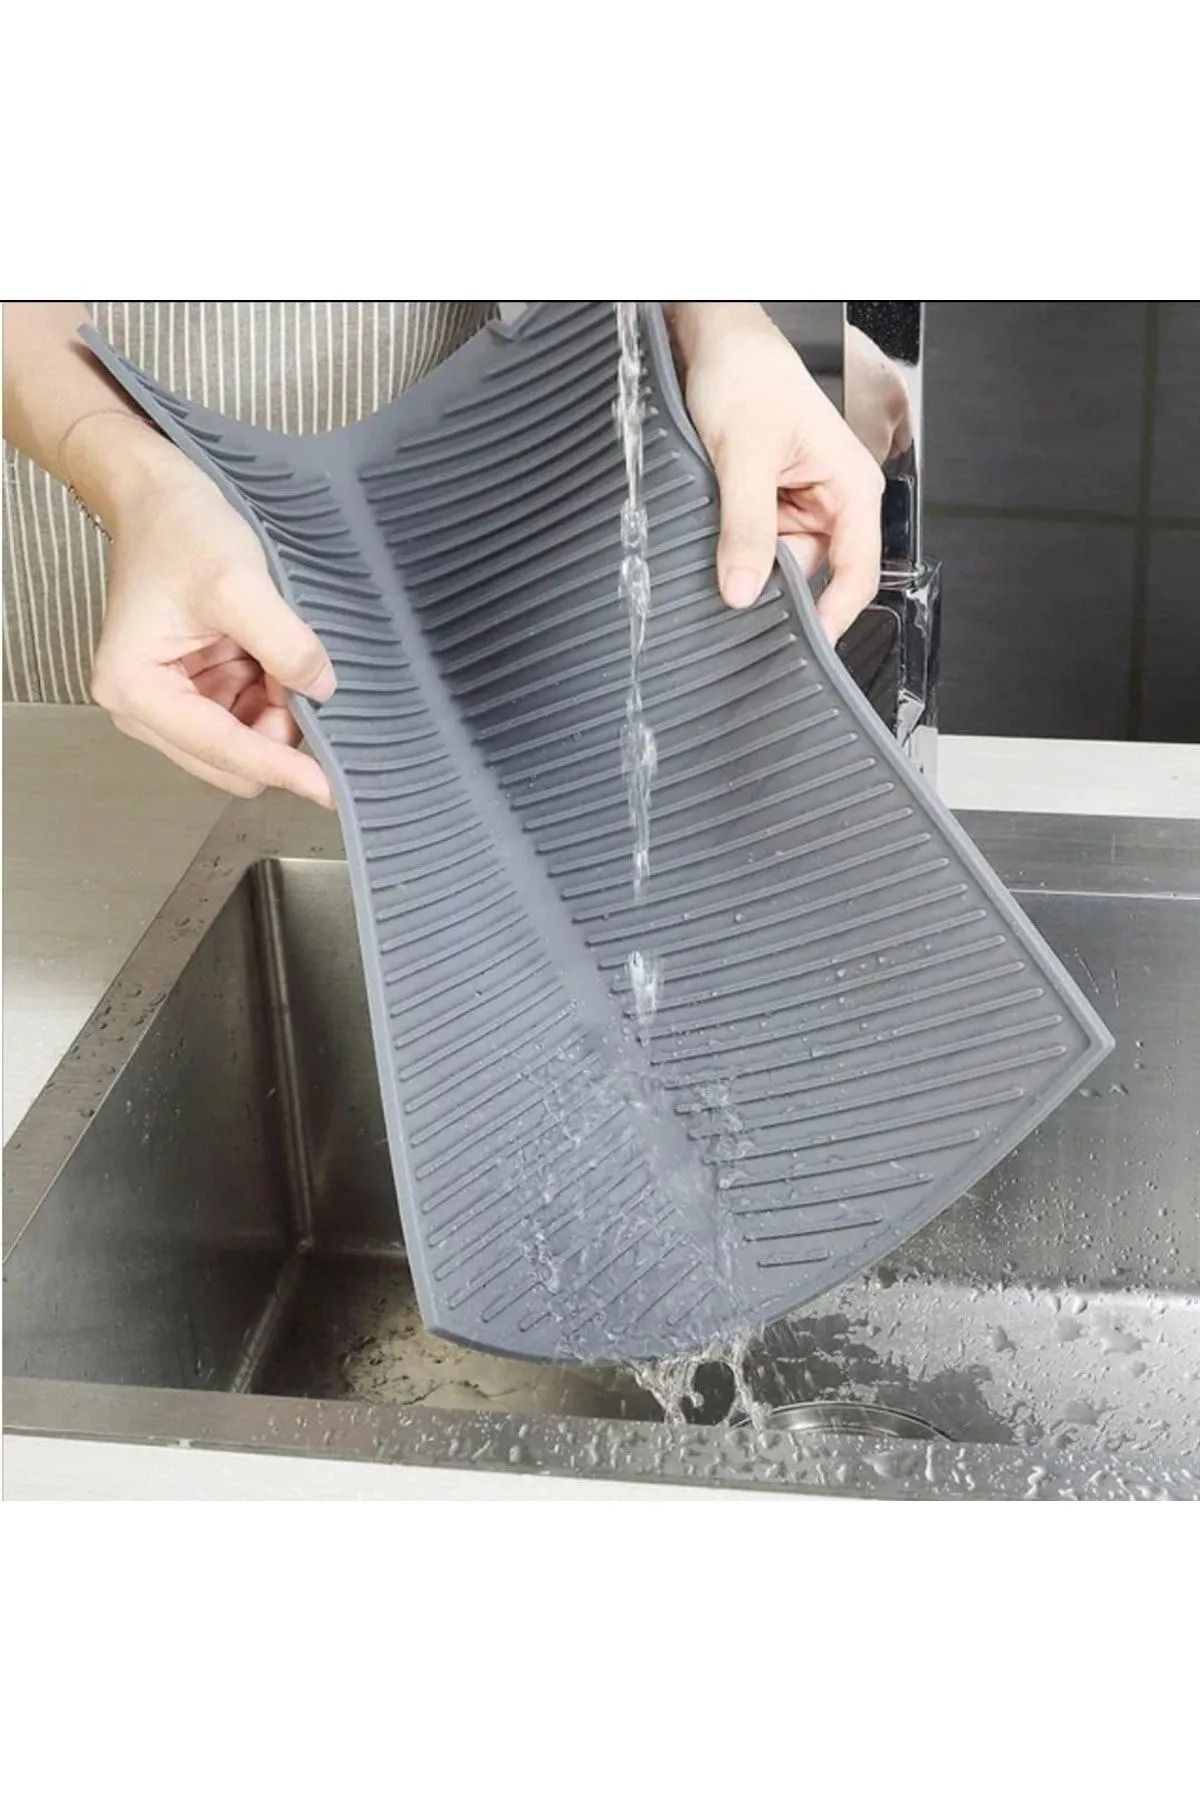  IYYI Silicone Dish Drying Mat Large Draining Mat